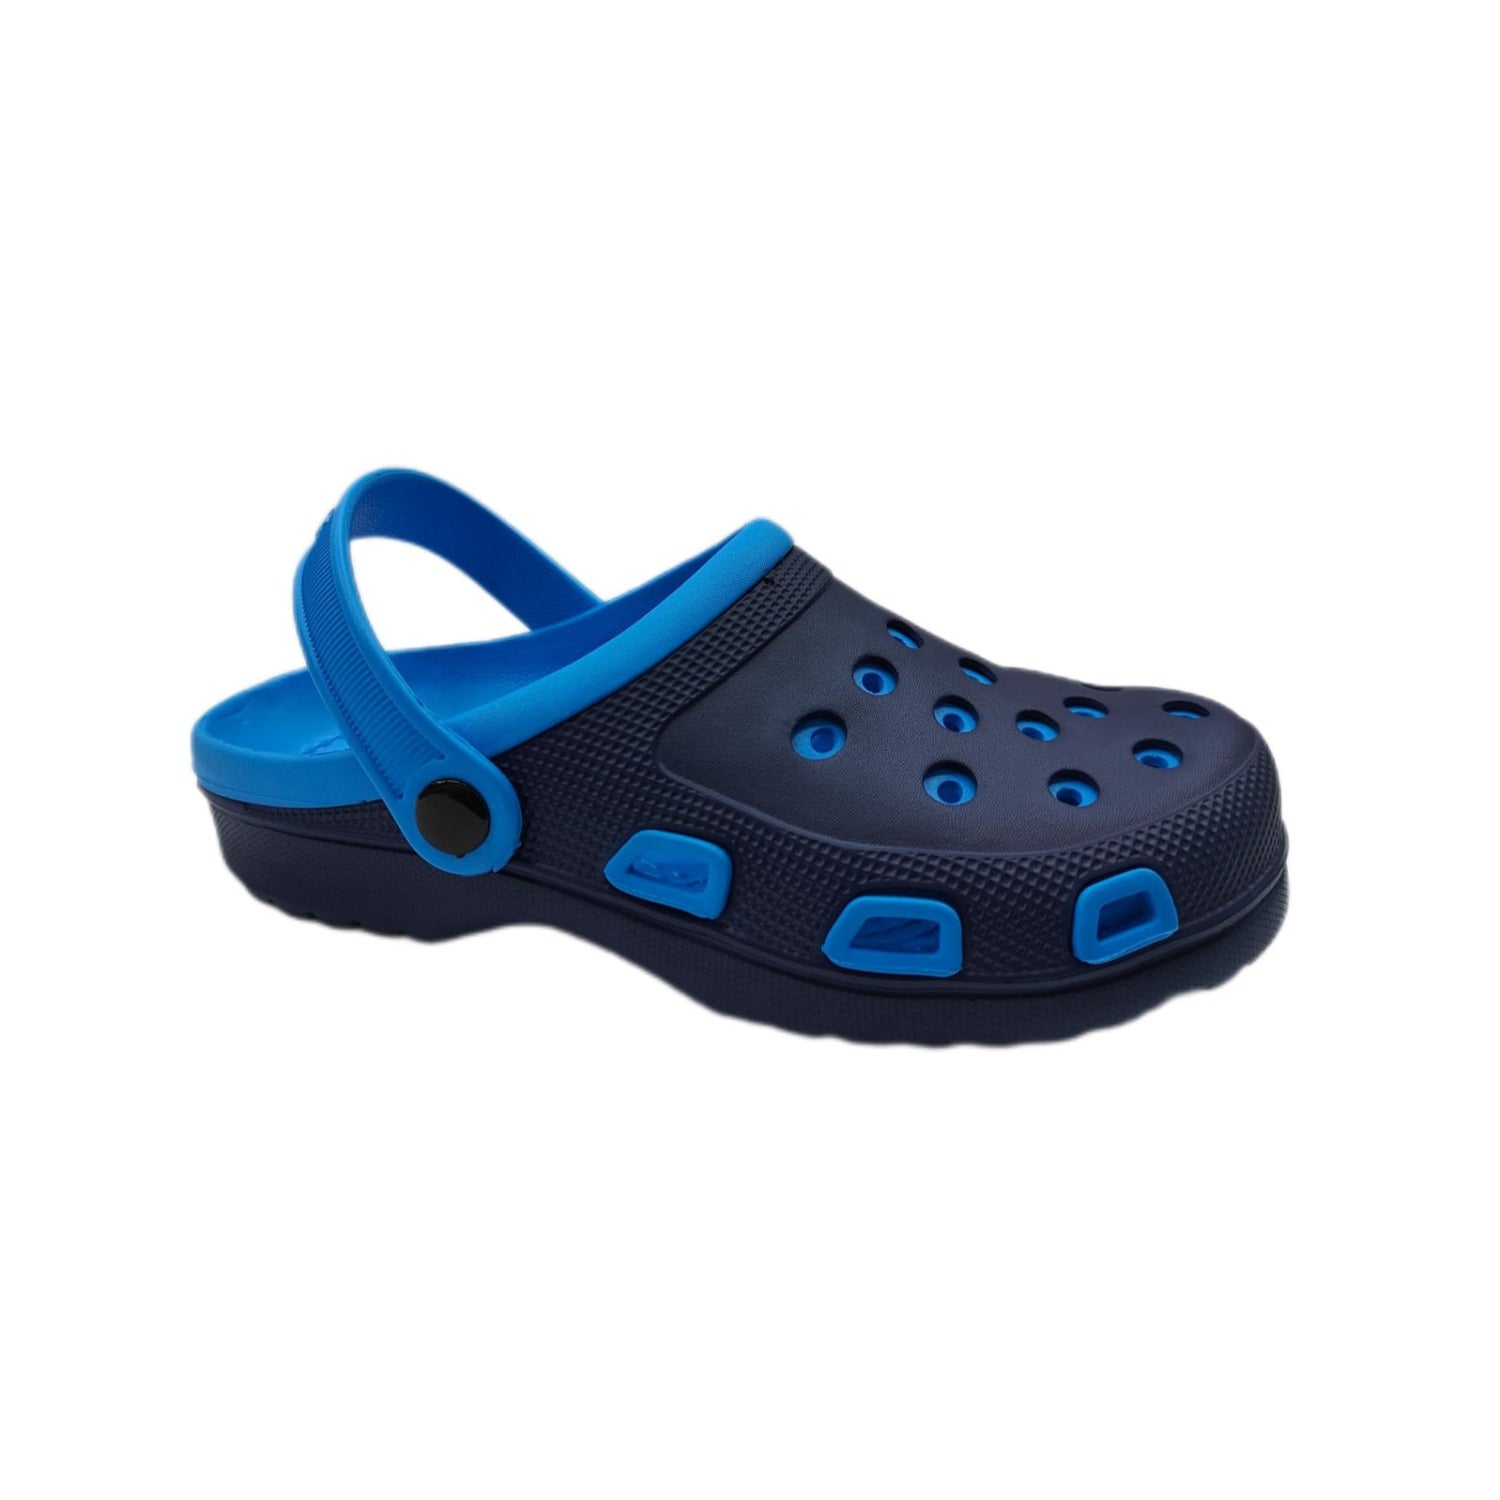 Buy Clog Sandal at Gokyo Outdoor Clothing & Gear